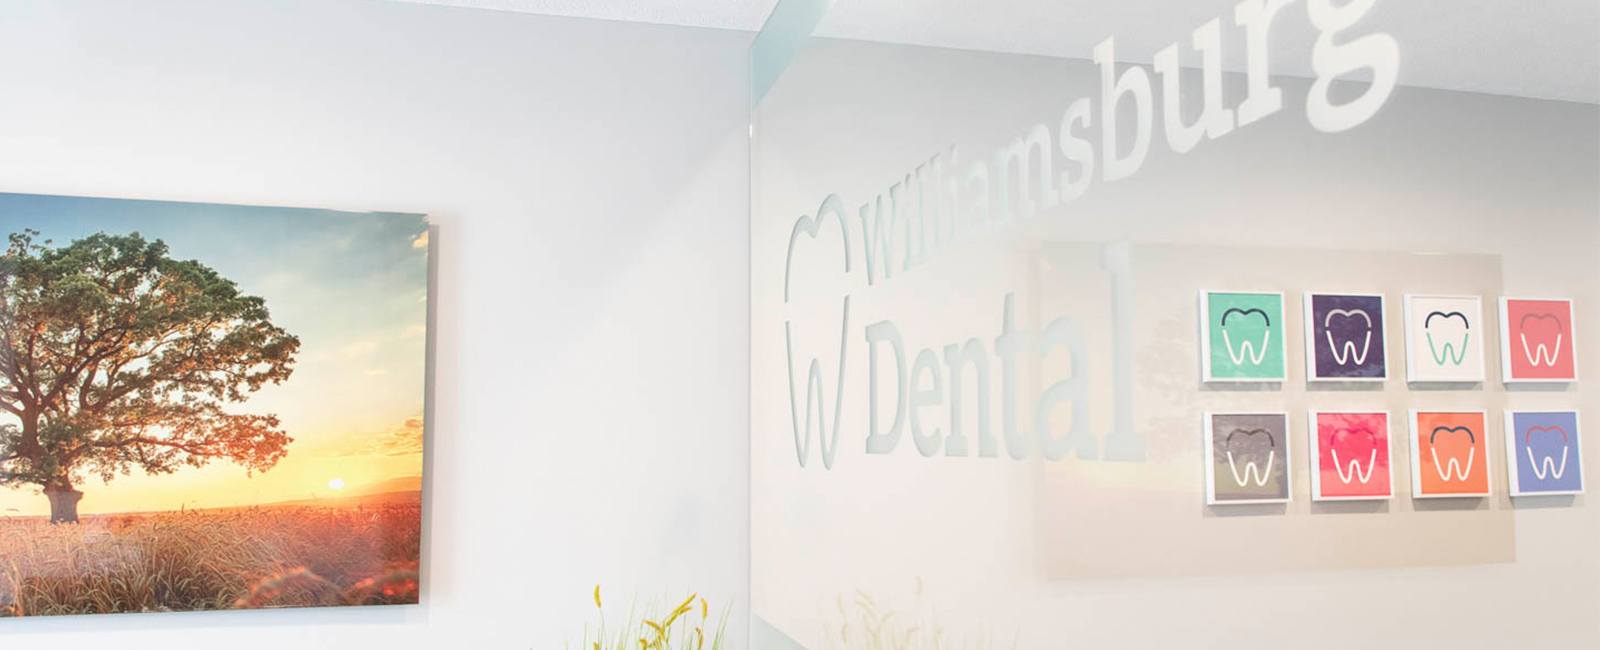 Williamsburg Dental logo on glass partition